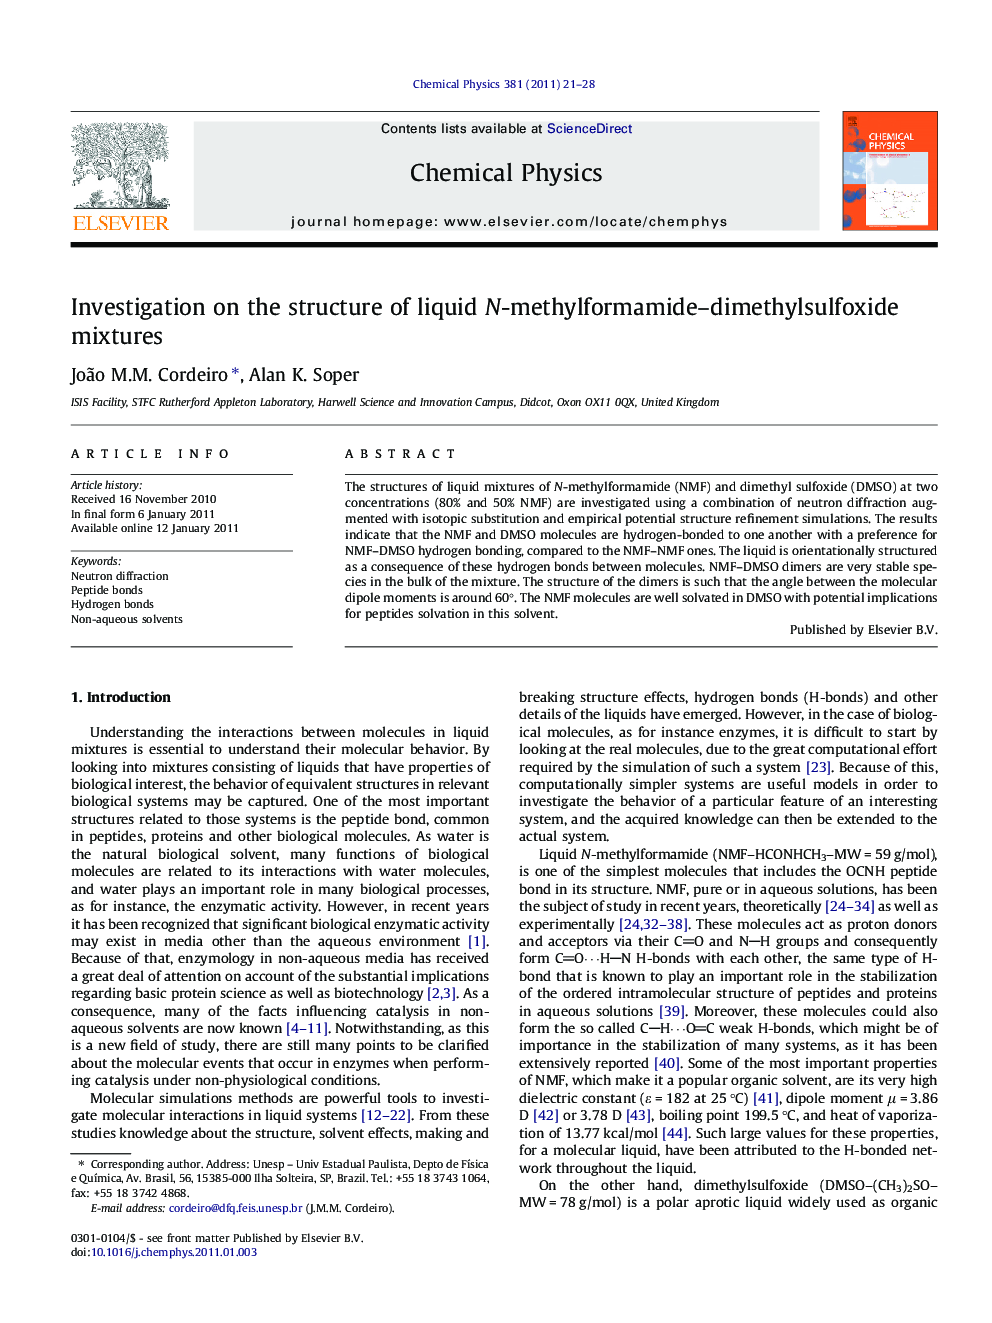 Investigation on the structure of liquid N-methylformamide-dimethylsulfoxide mixtures